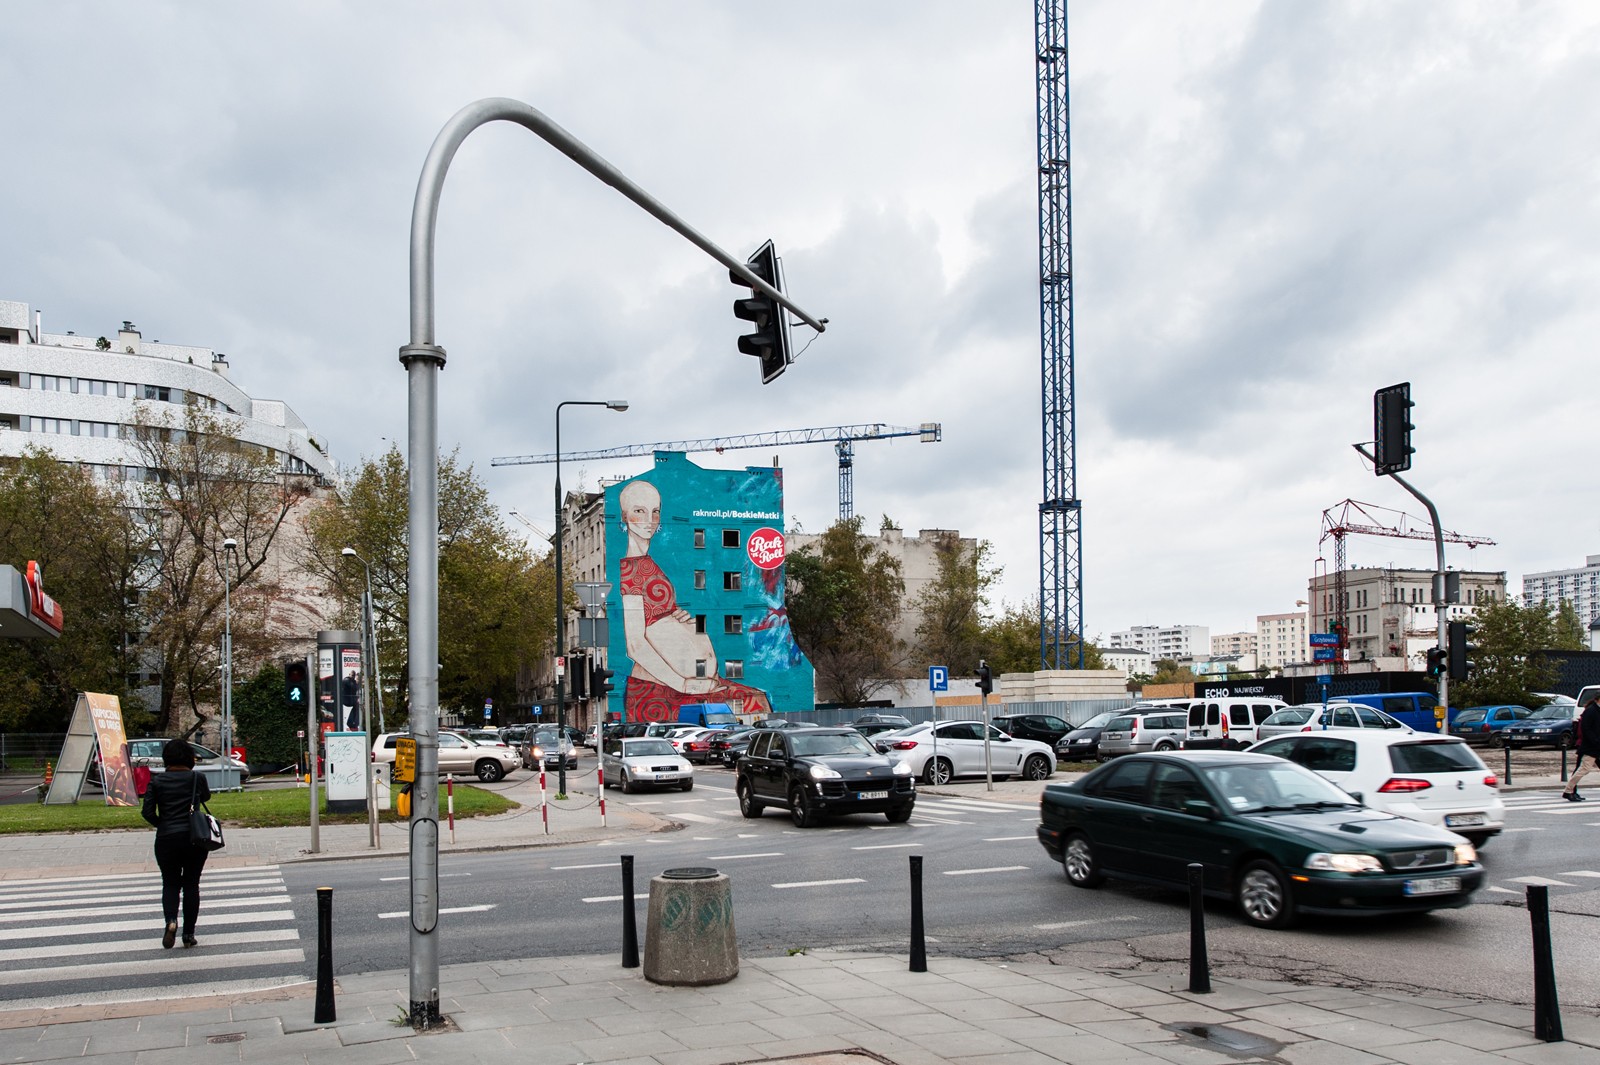 mural for fundation rak’n’roll boskie matki on 50 wronia street warsaw | Boskie Matki | Portfolio